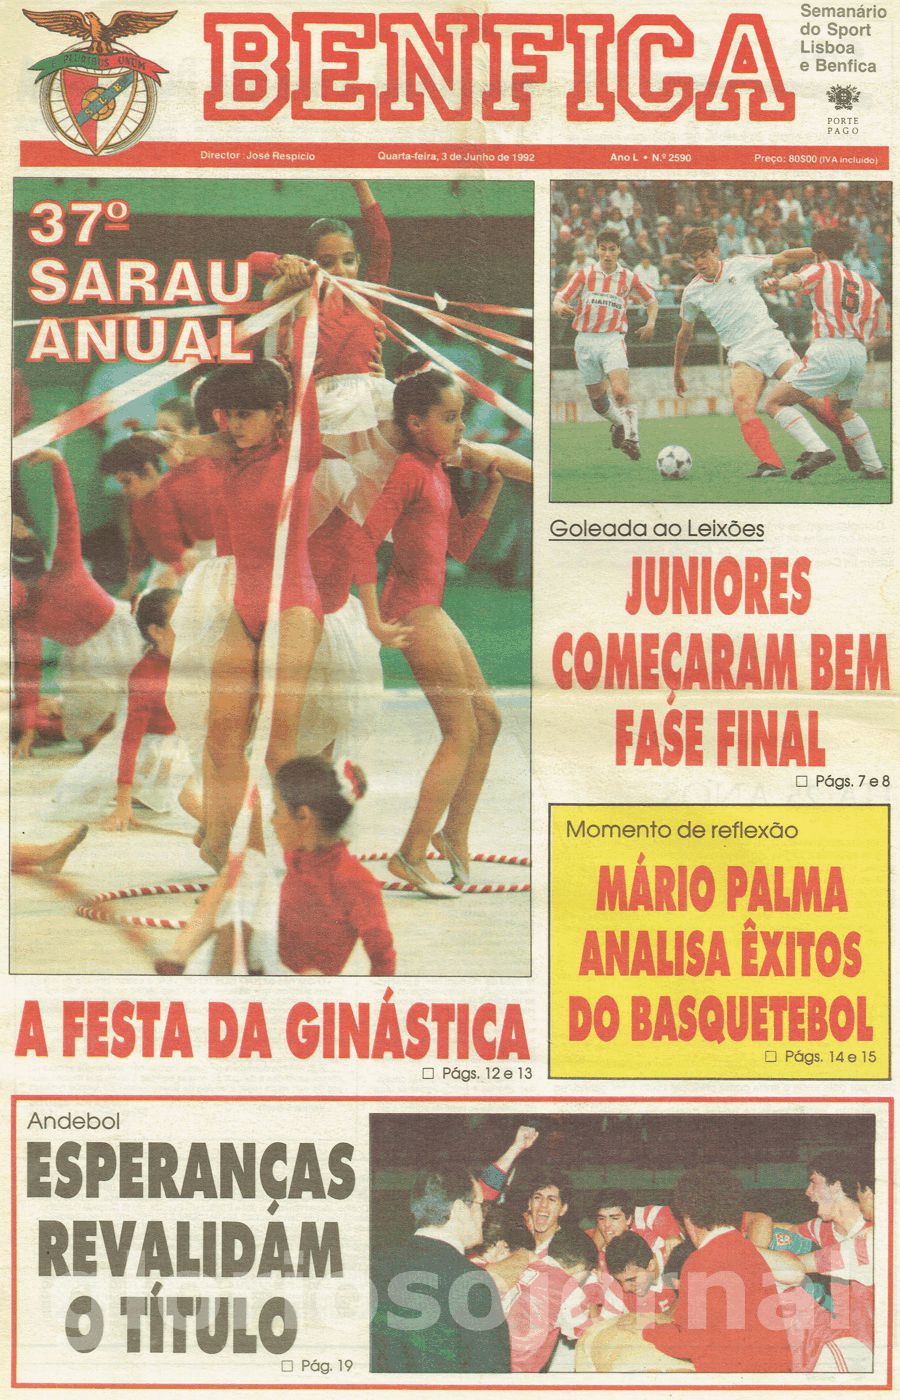 jornal o benfica 2590 1992-06-03